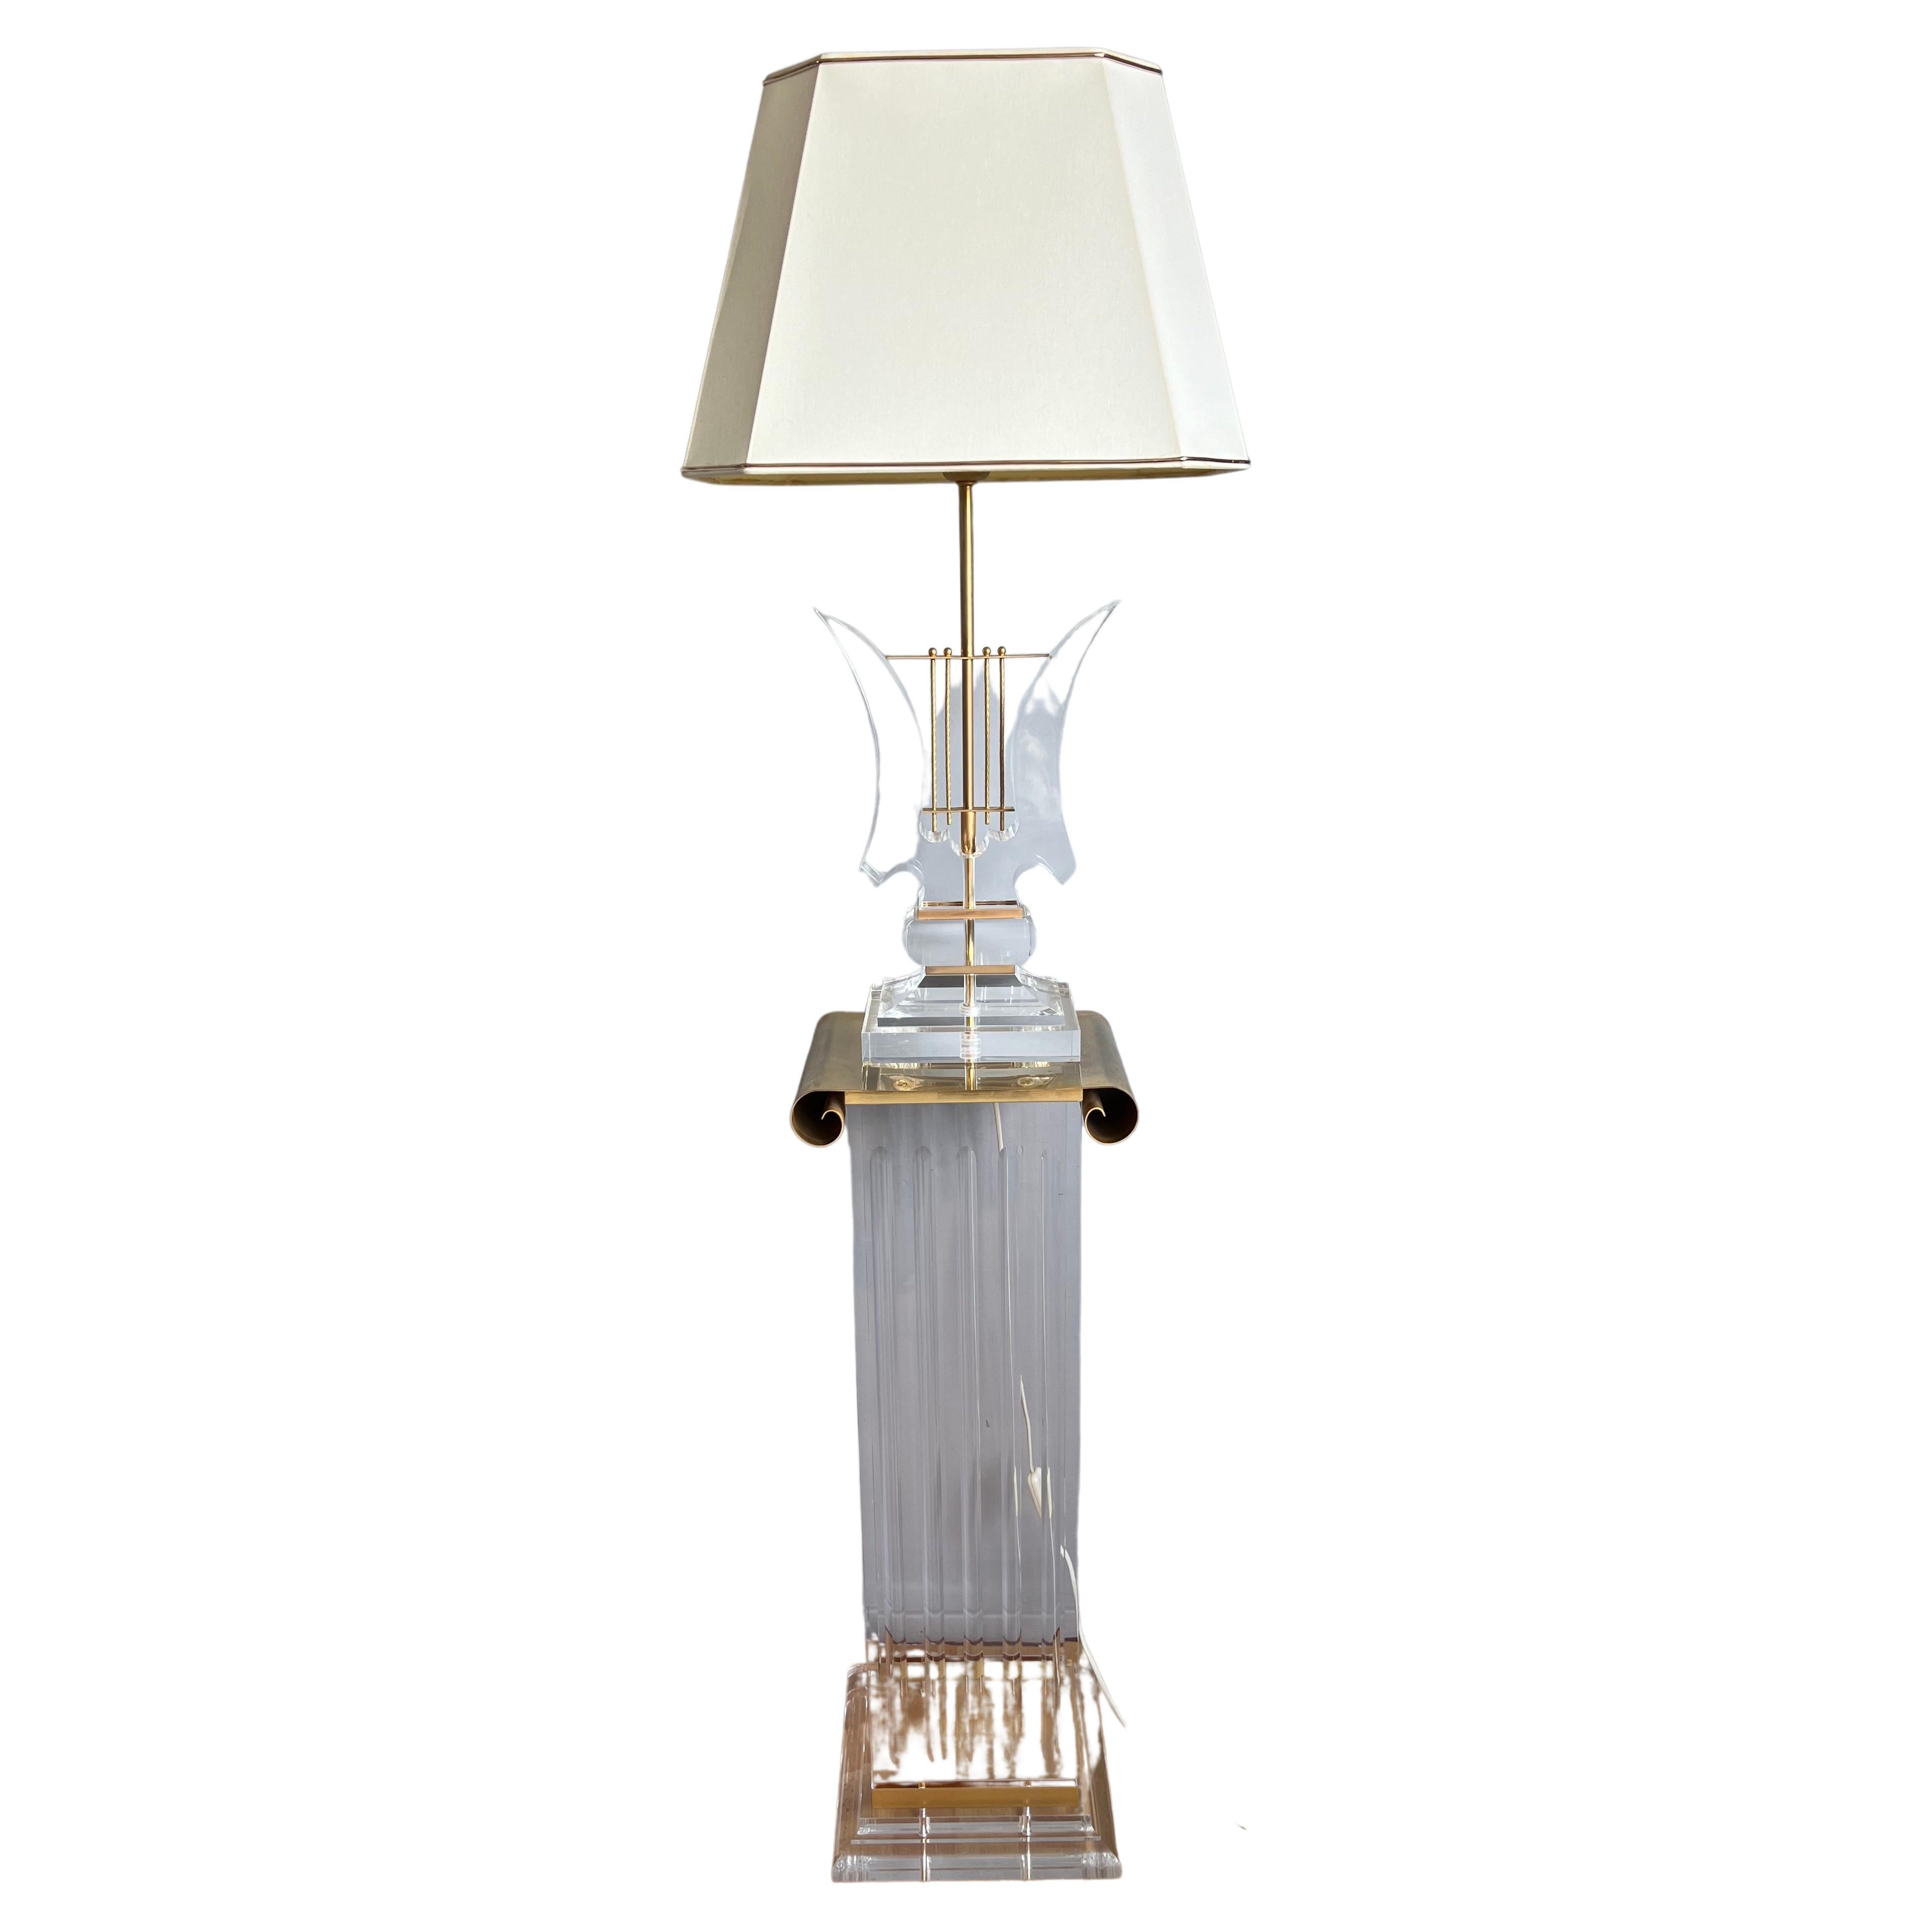  Rare & Stunning Mid Century Modern Lucite and Brass Pedestal Floor Lamp / Light